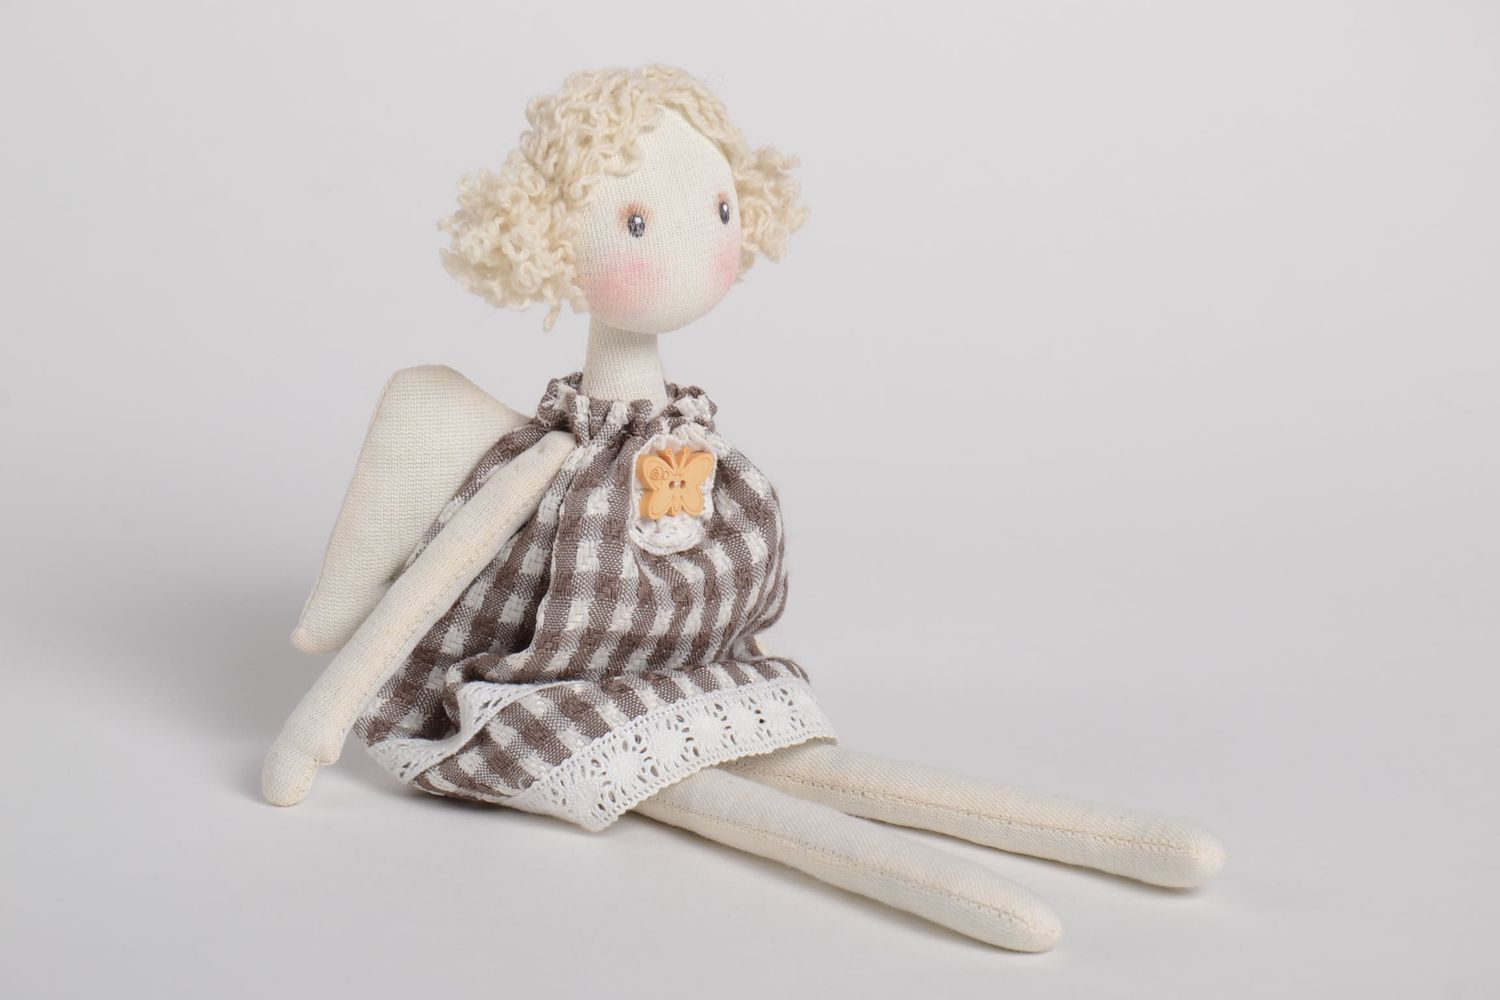 Soft doll handmade stuffed toy for children nursery decor ideas home decor photo 5